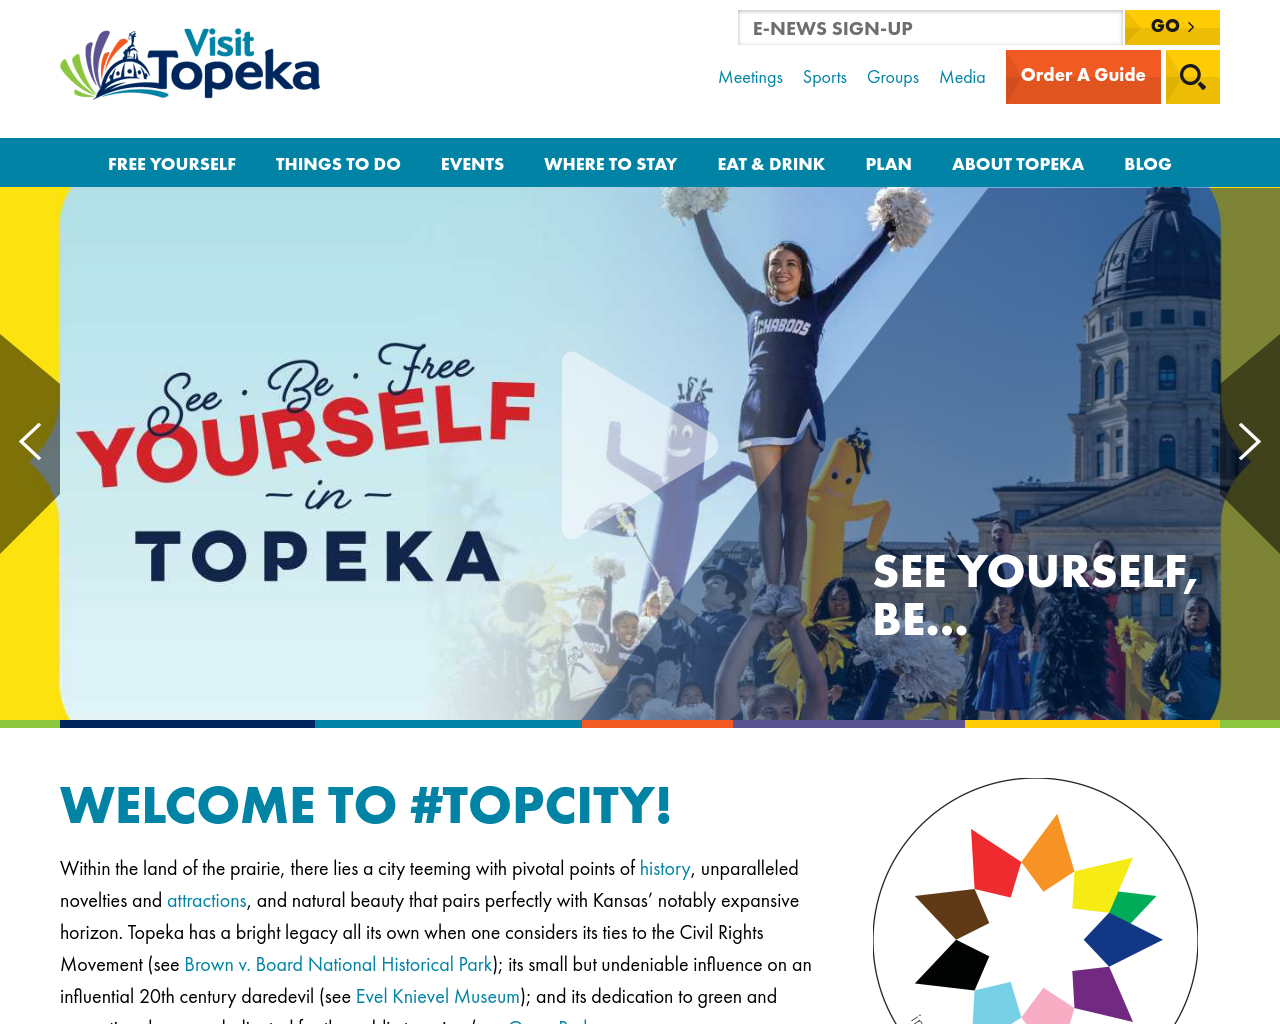 visittopeka.com